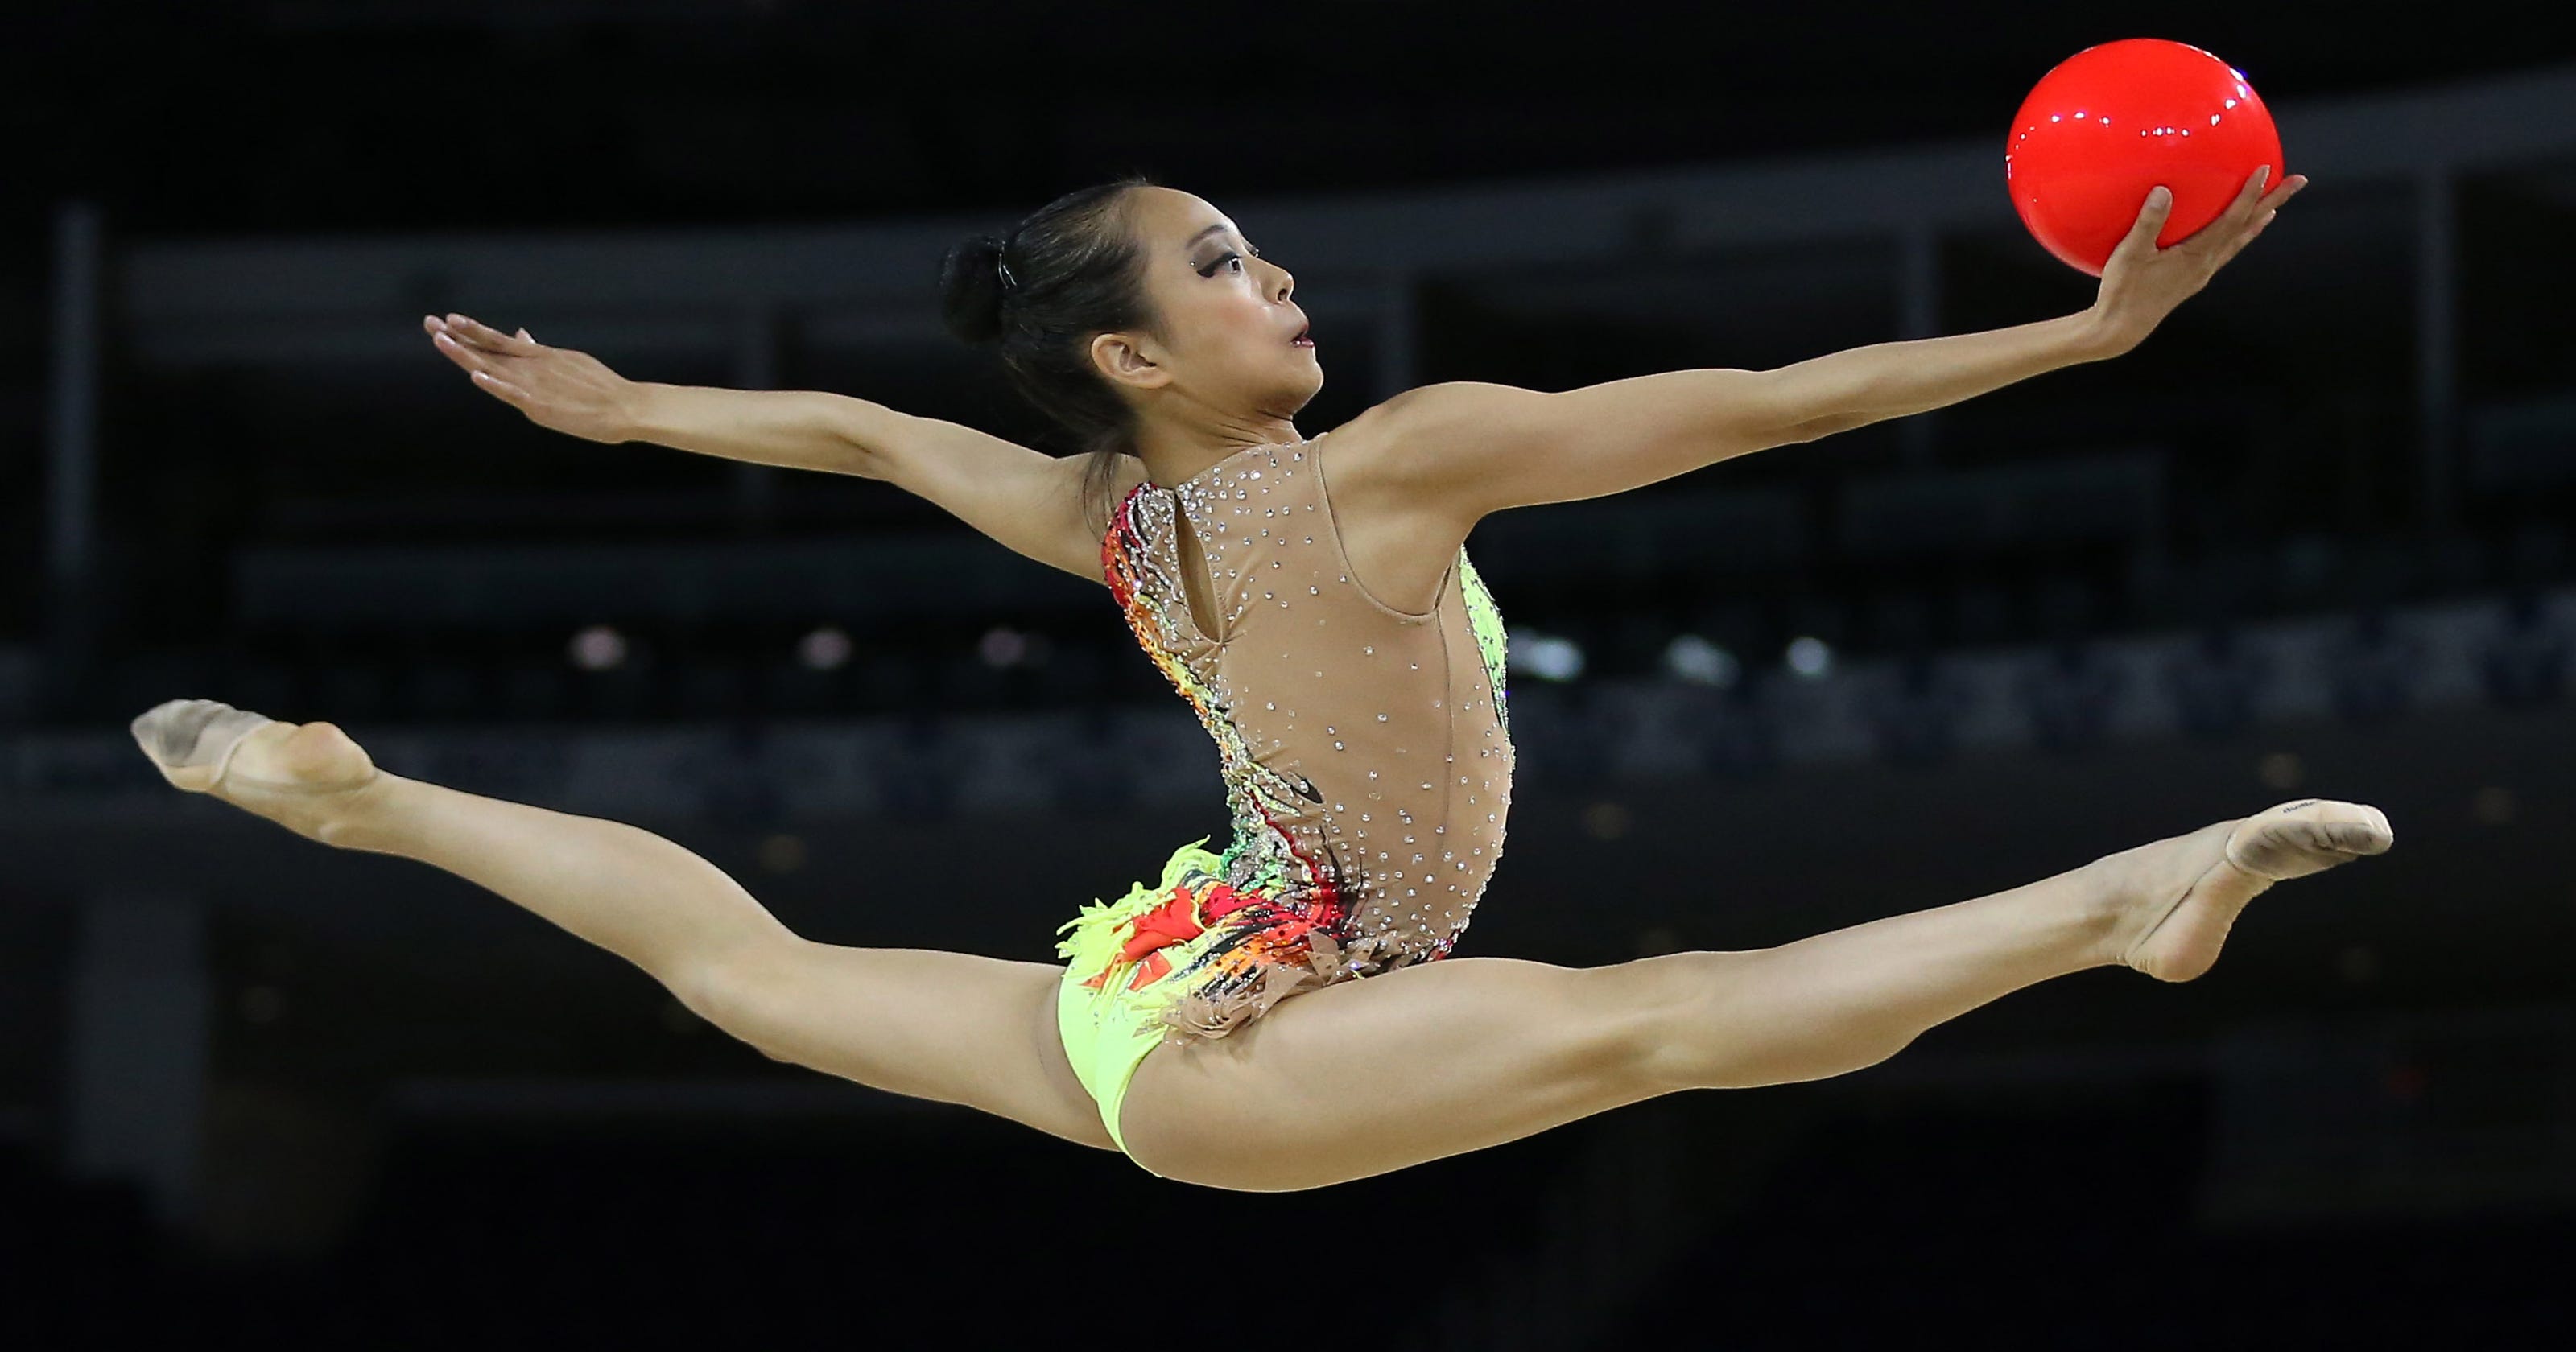 Rhythmic gymnast shows sport is more than 'prancing around'